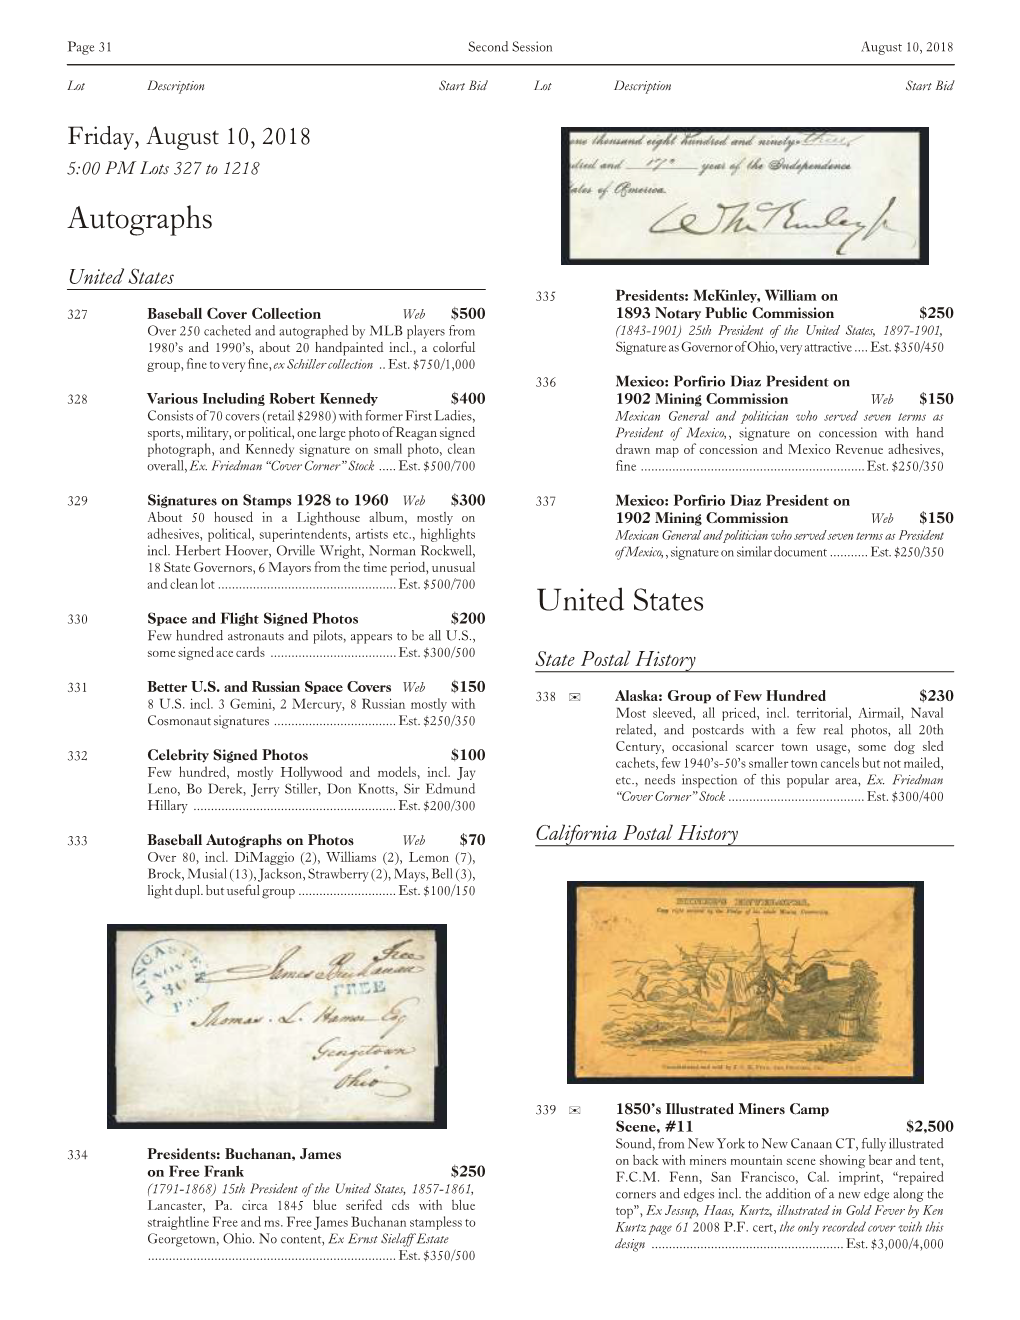 Autographs United States